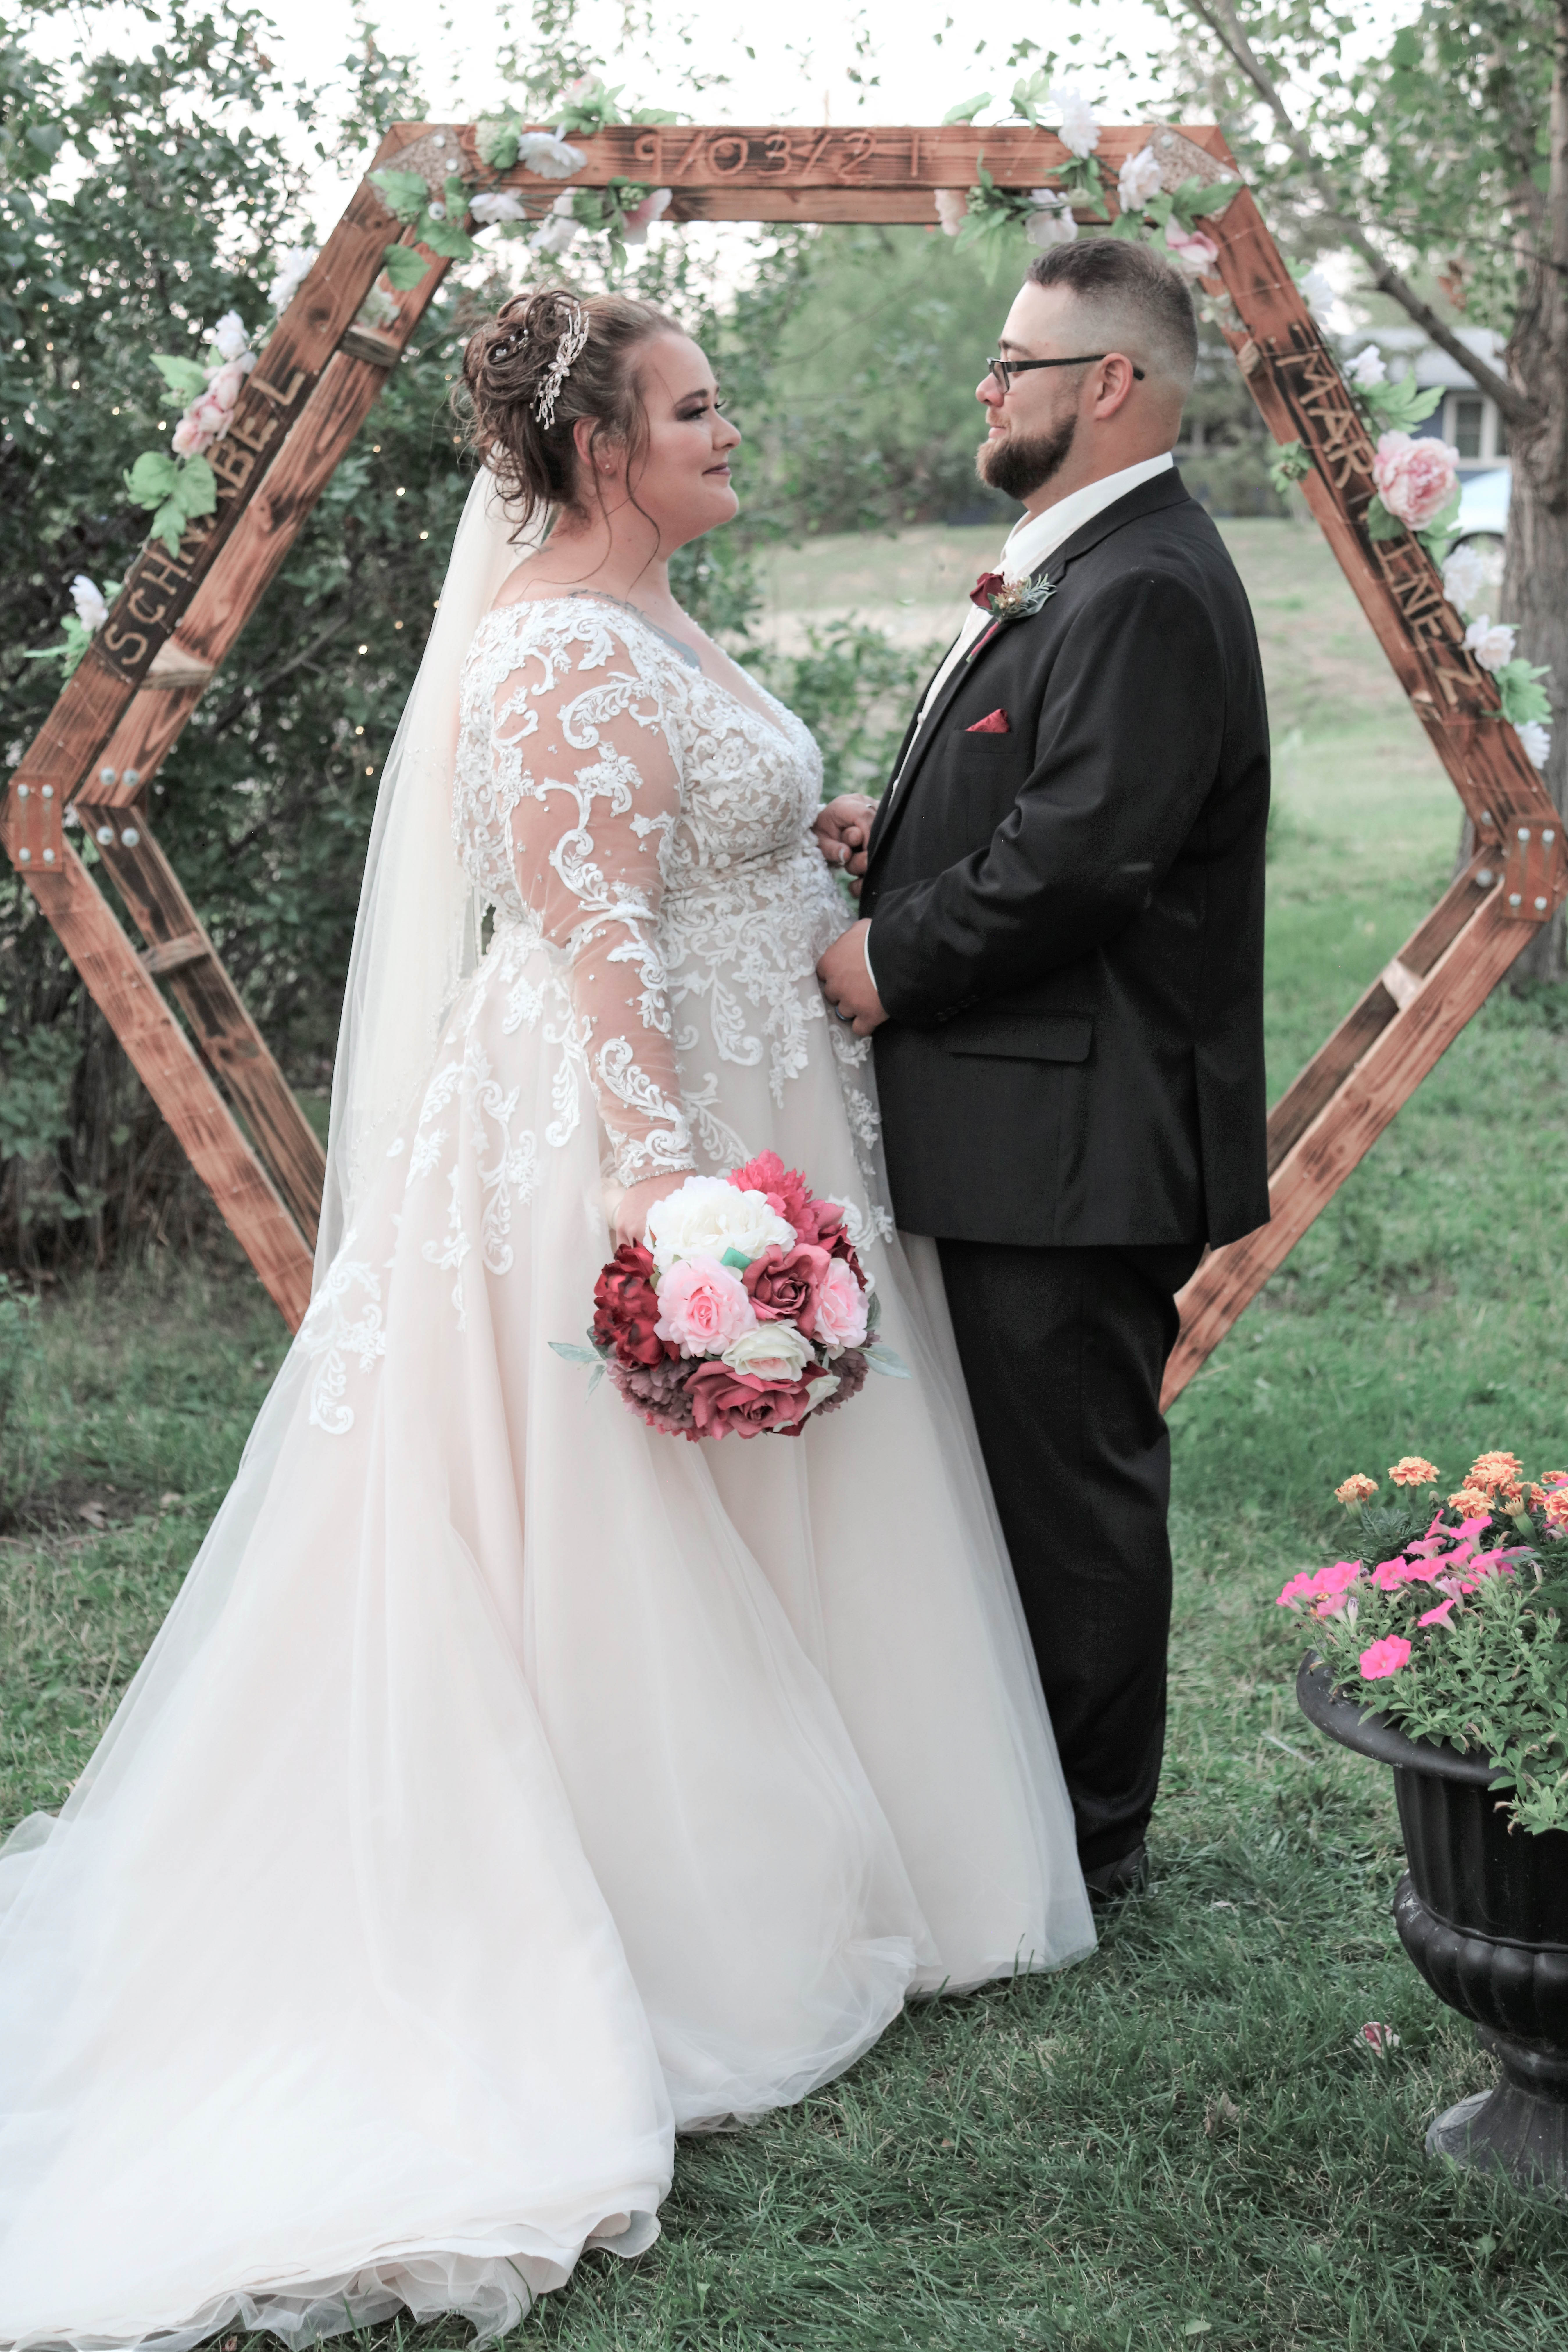 Jessica and Thomas Martinez Wedding Photo